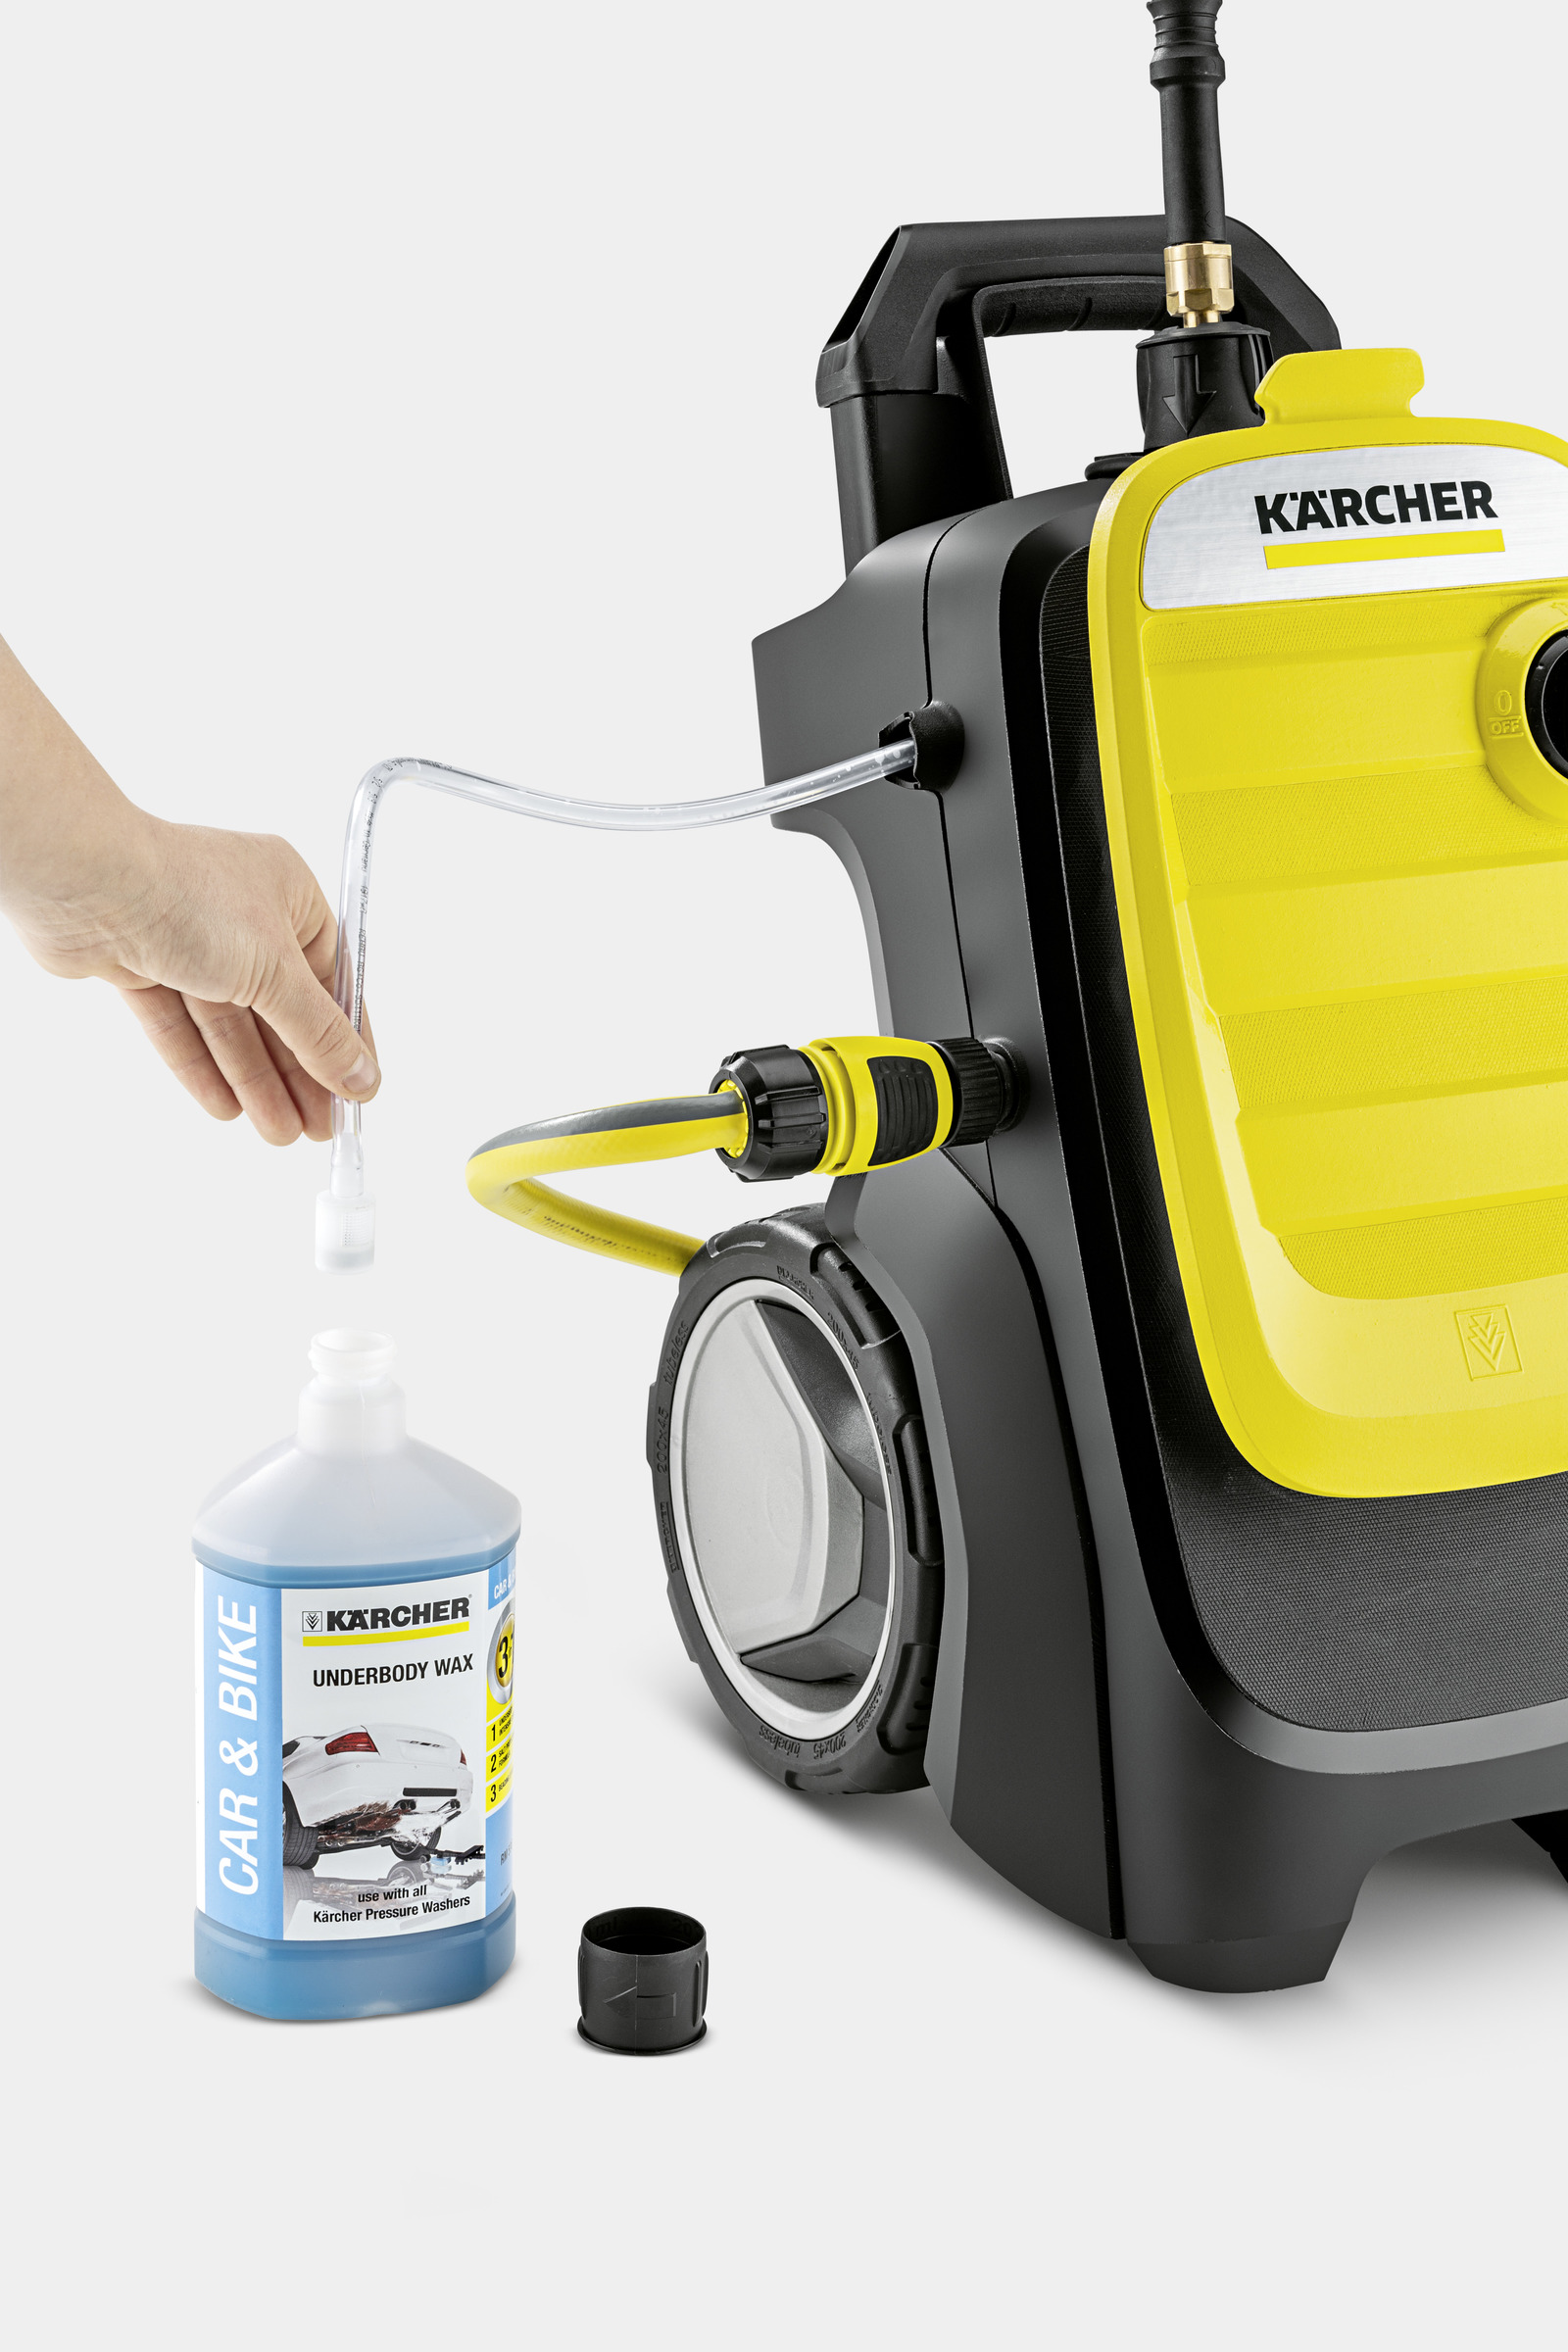 Karcher K 7 COMPACT Pressure Washer 180 Bar